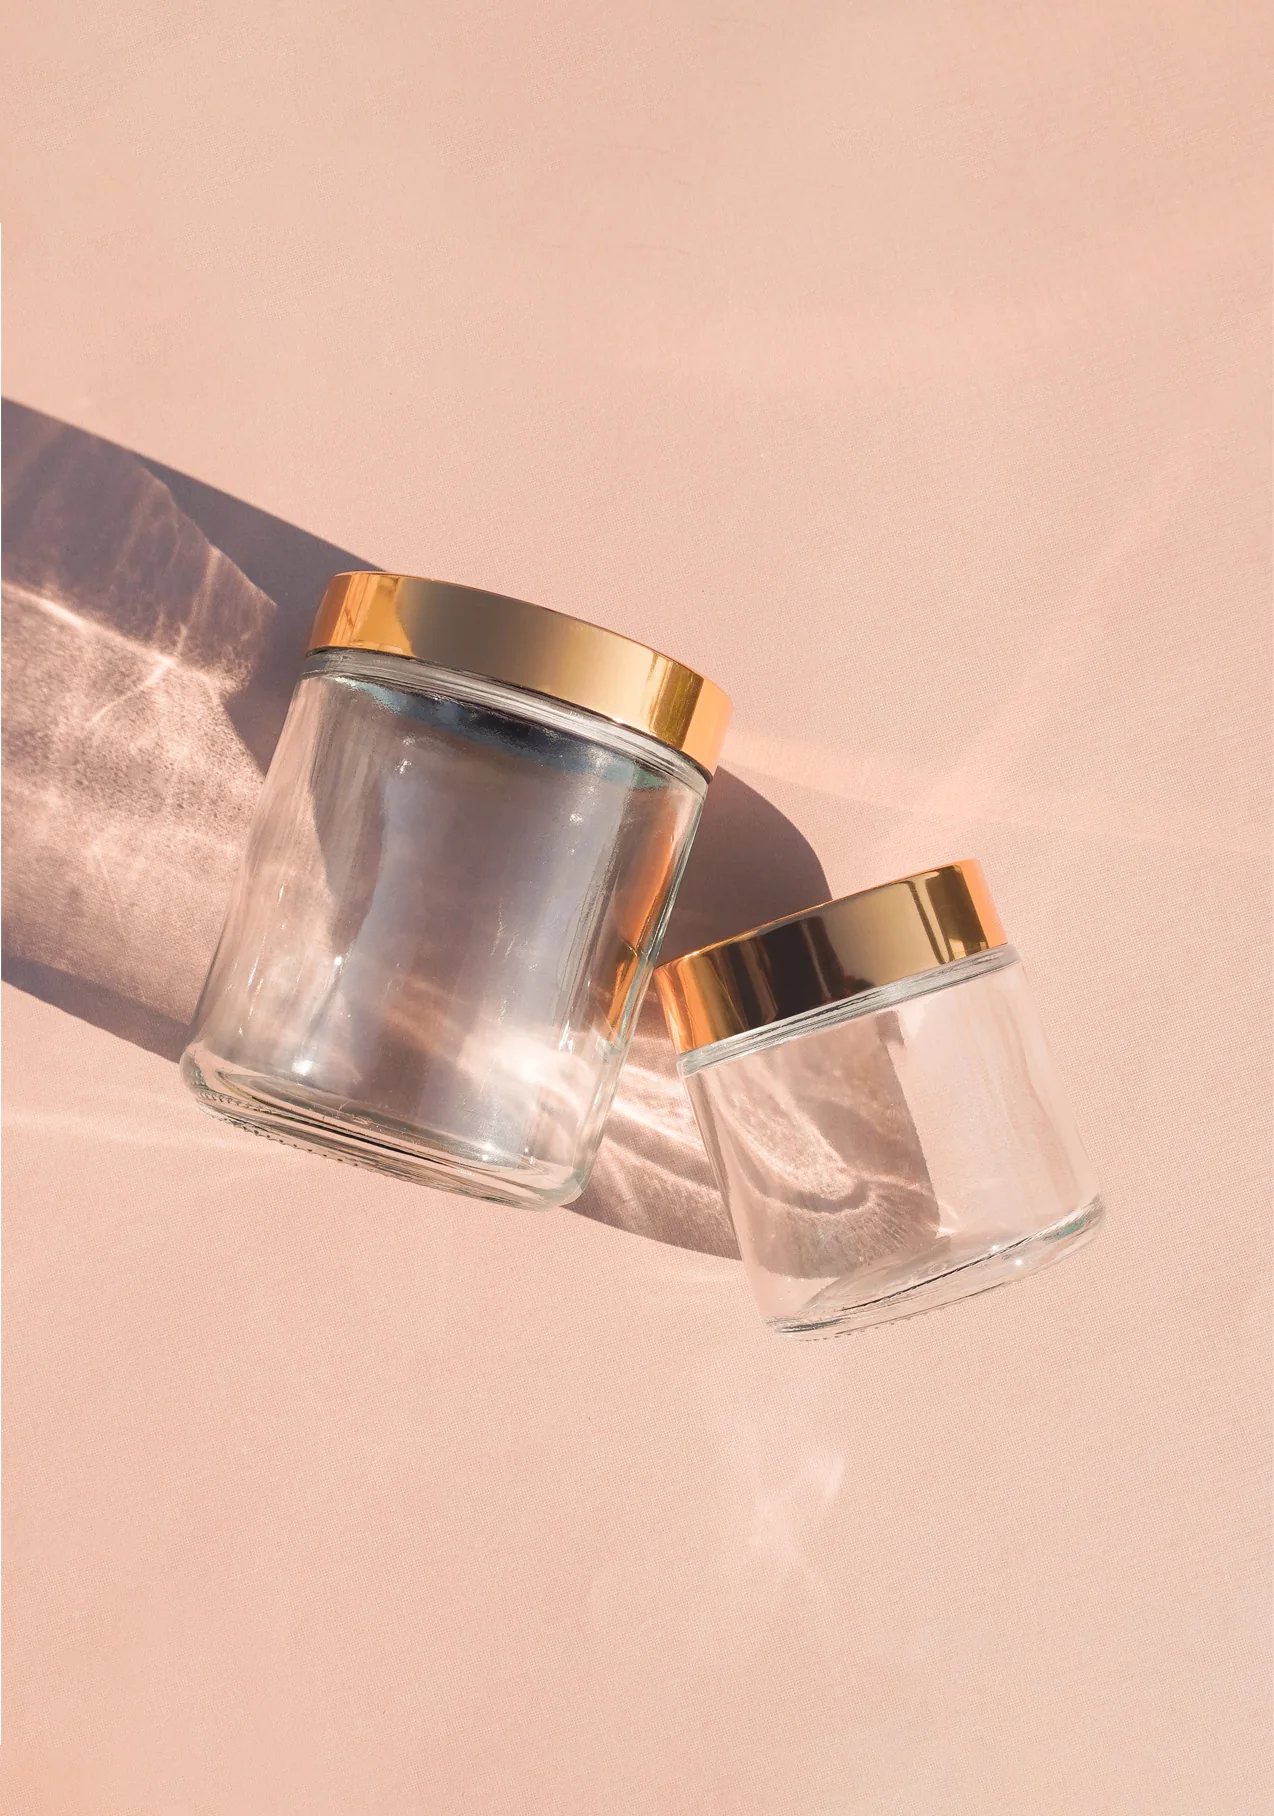 70ml Glass Cosmetic Jar Bottle with Gold Metallic Lid